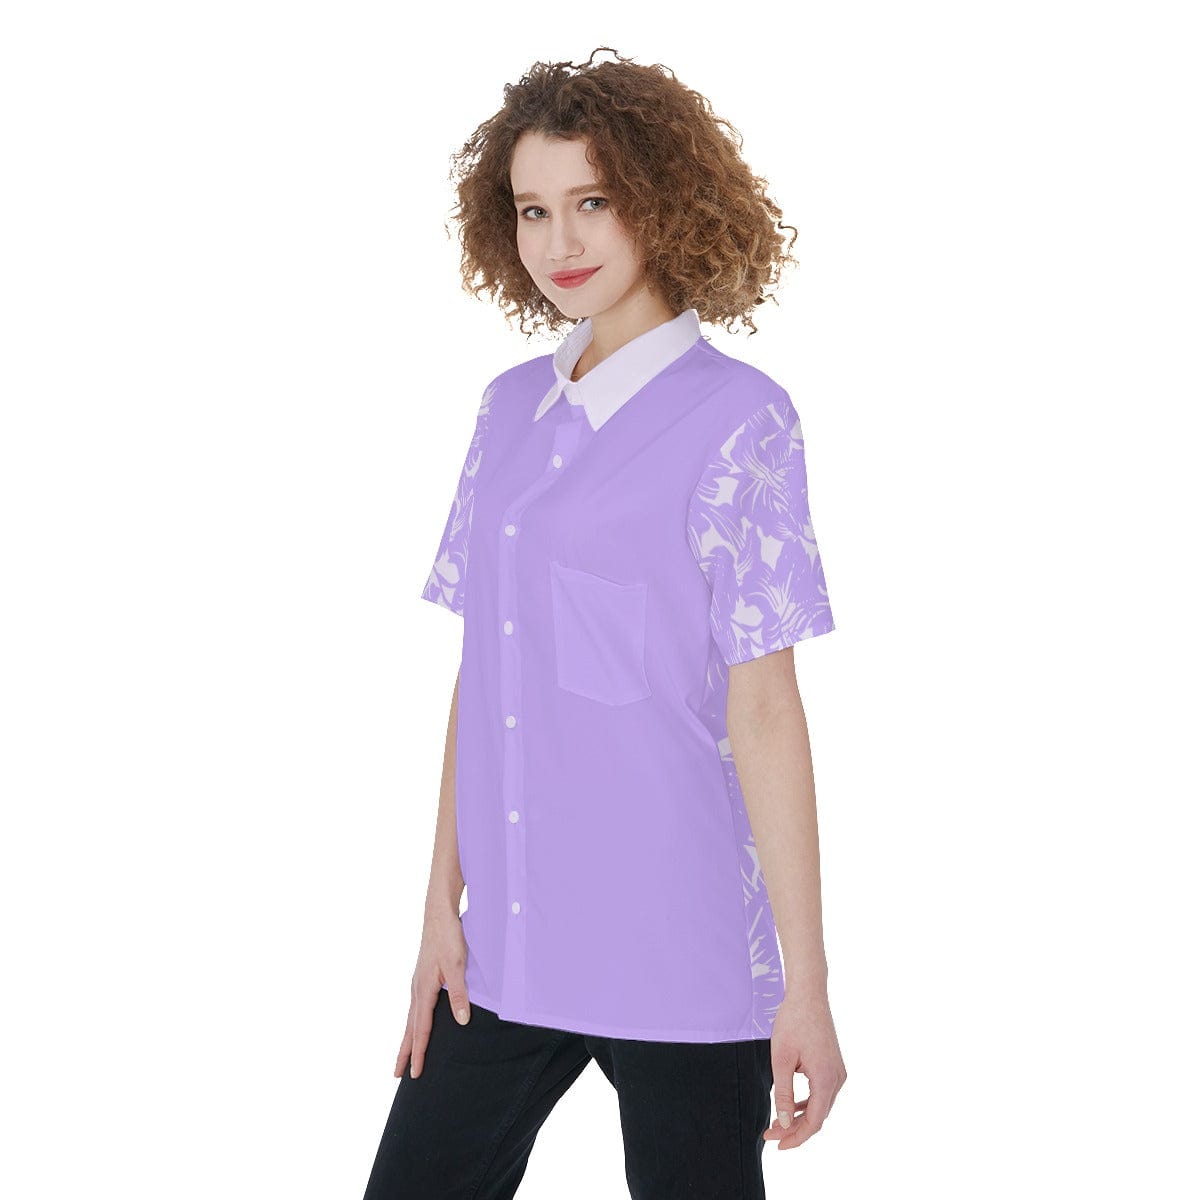 Yoycol Skirt Set Hawaiian Lavender - Women's Short Sleeve Shirt With Pocket